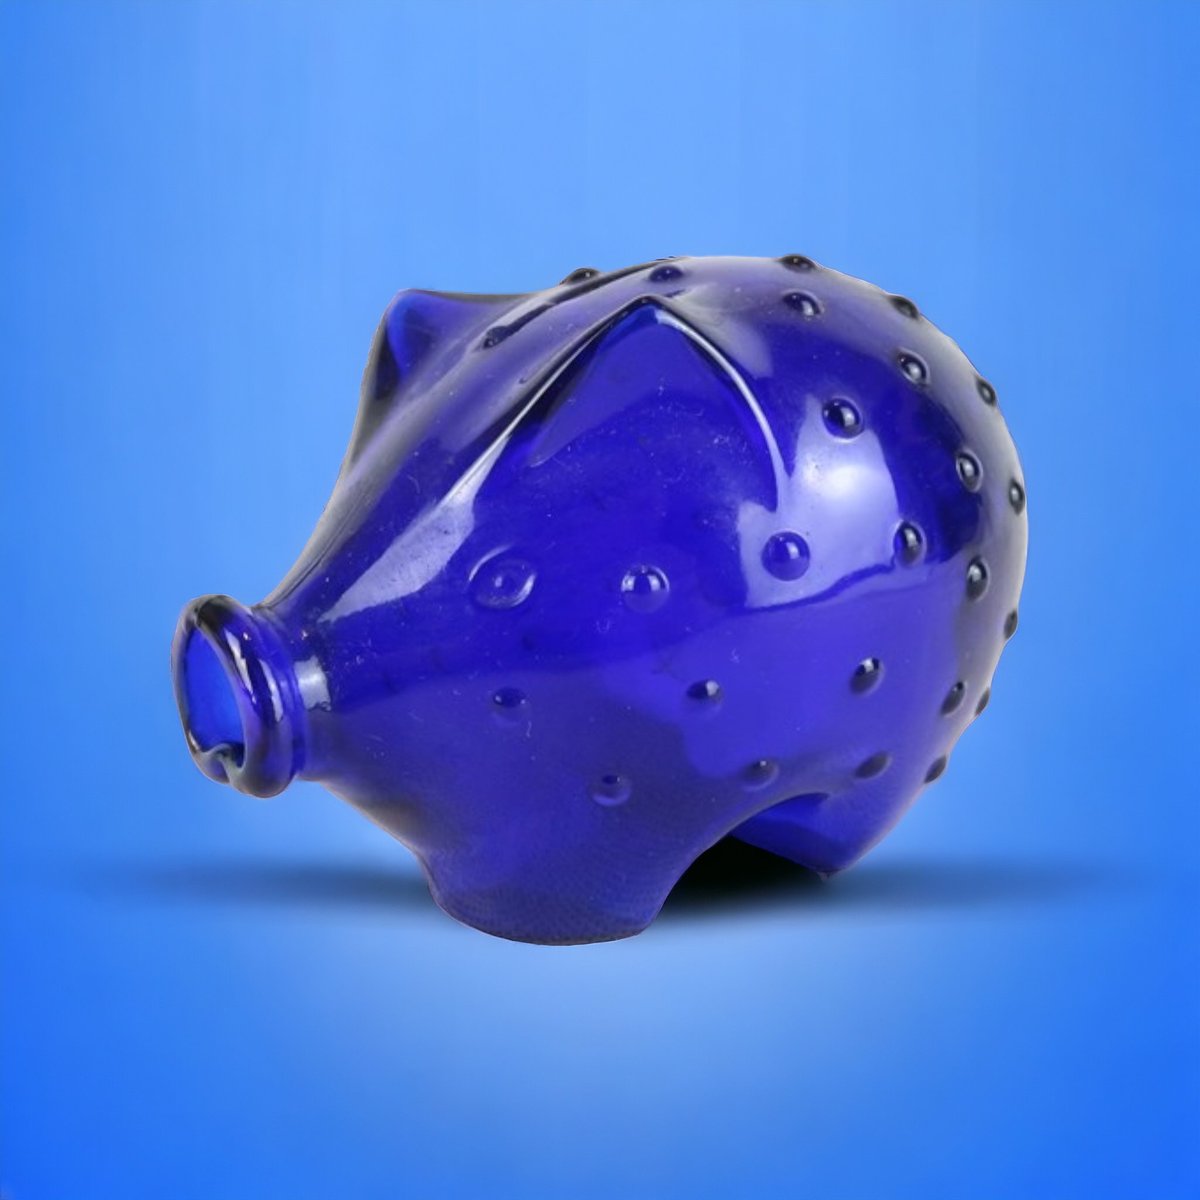 Jacob E Bang (Danish, 1899-1965) cobalt blue hobnail piggy bank for Holmegaard. 13 cm (l). 🐷

Lot # 033 in our Collector: Glass auction.

Bidding is open.

#glass #artglass #danishglass #holmegaard #pig #piggy #cobaltblue #auction #auctionhouse #onlineauction #centralcoast